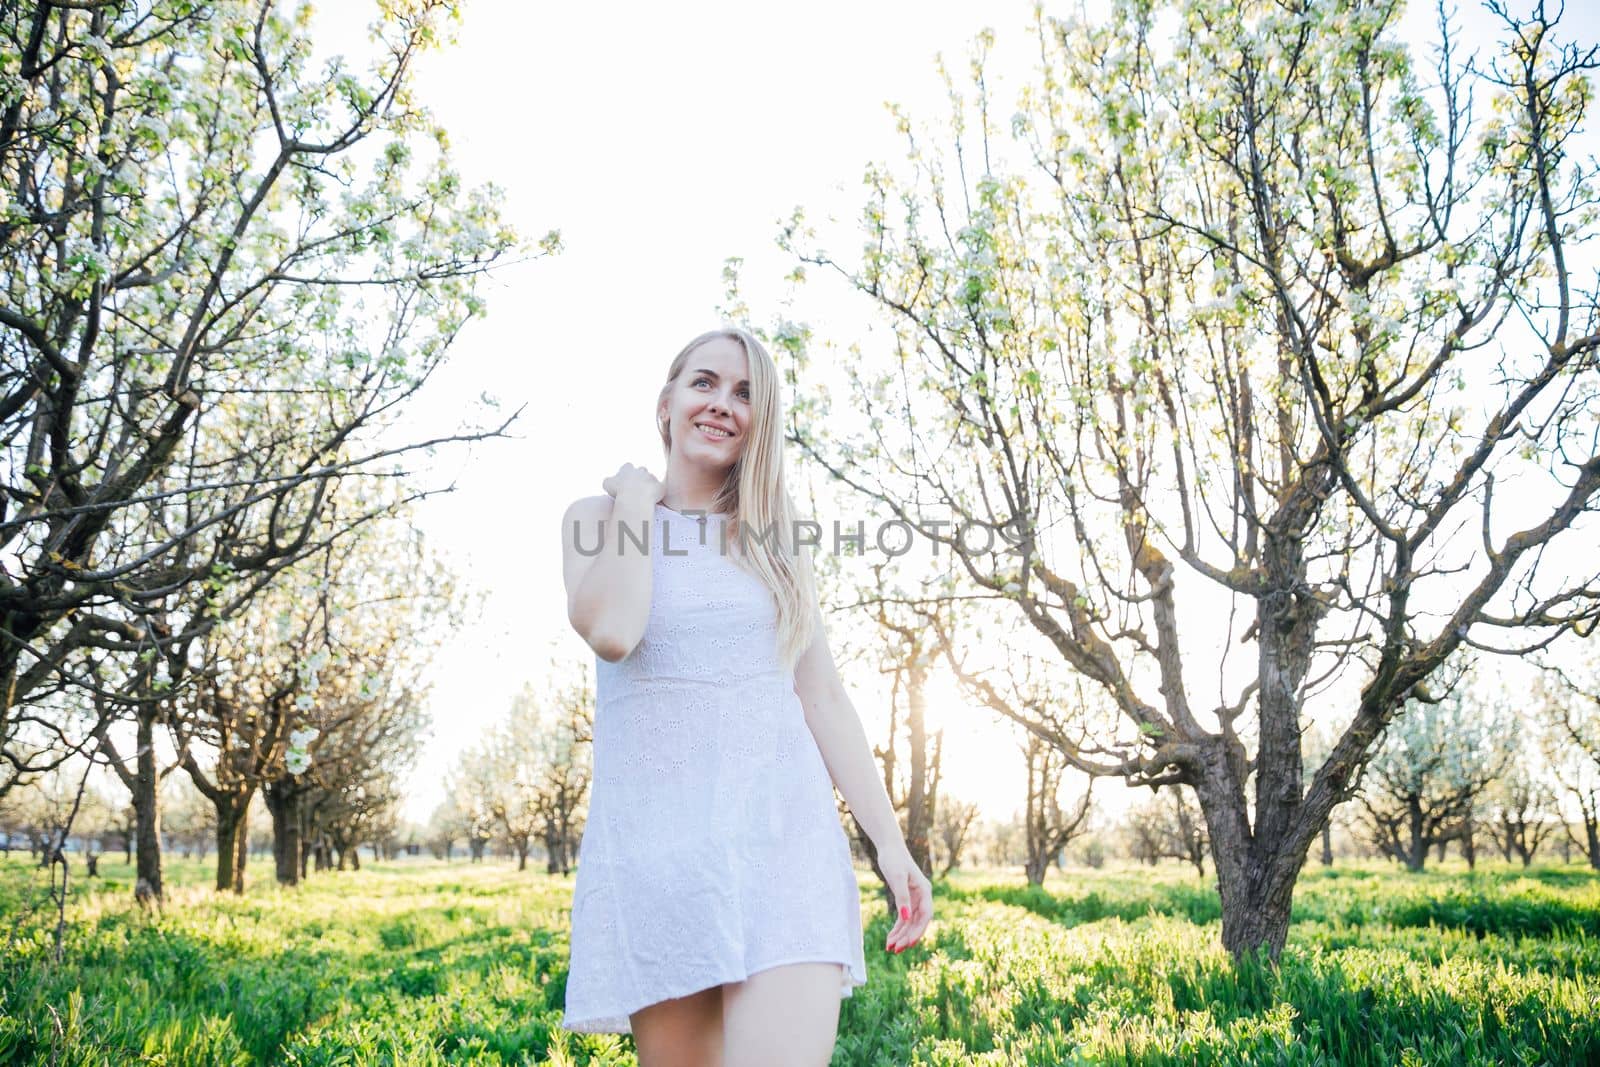 blonde woman in white dress walks in park flowering trees garden by Simakov